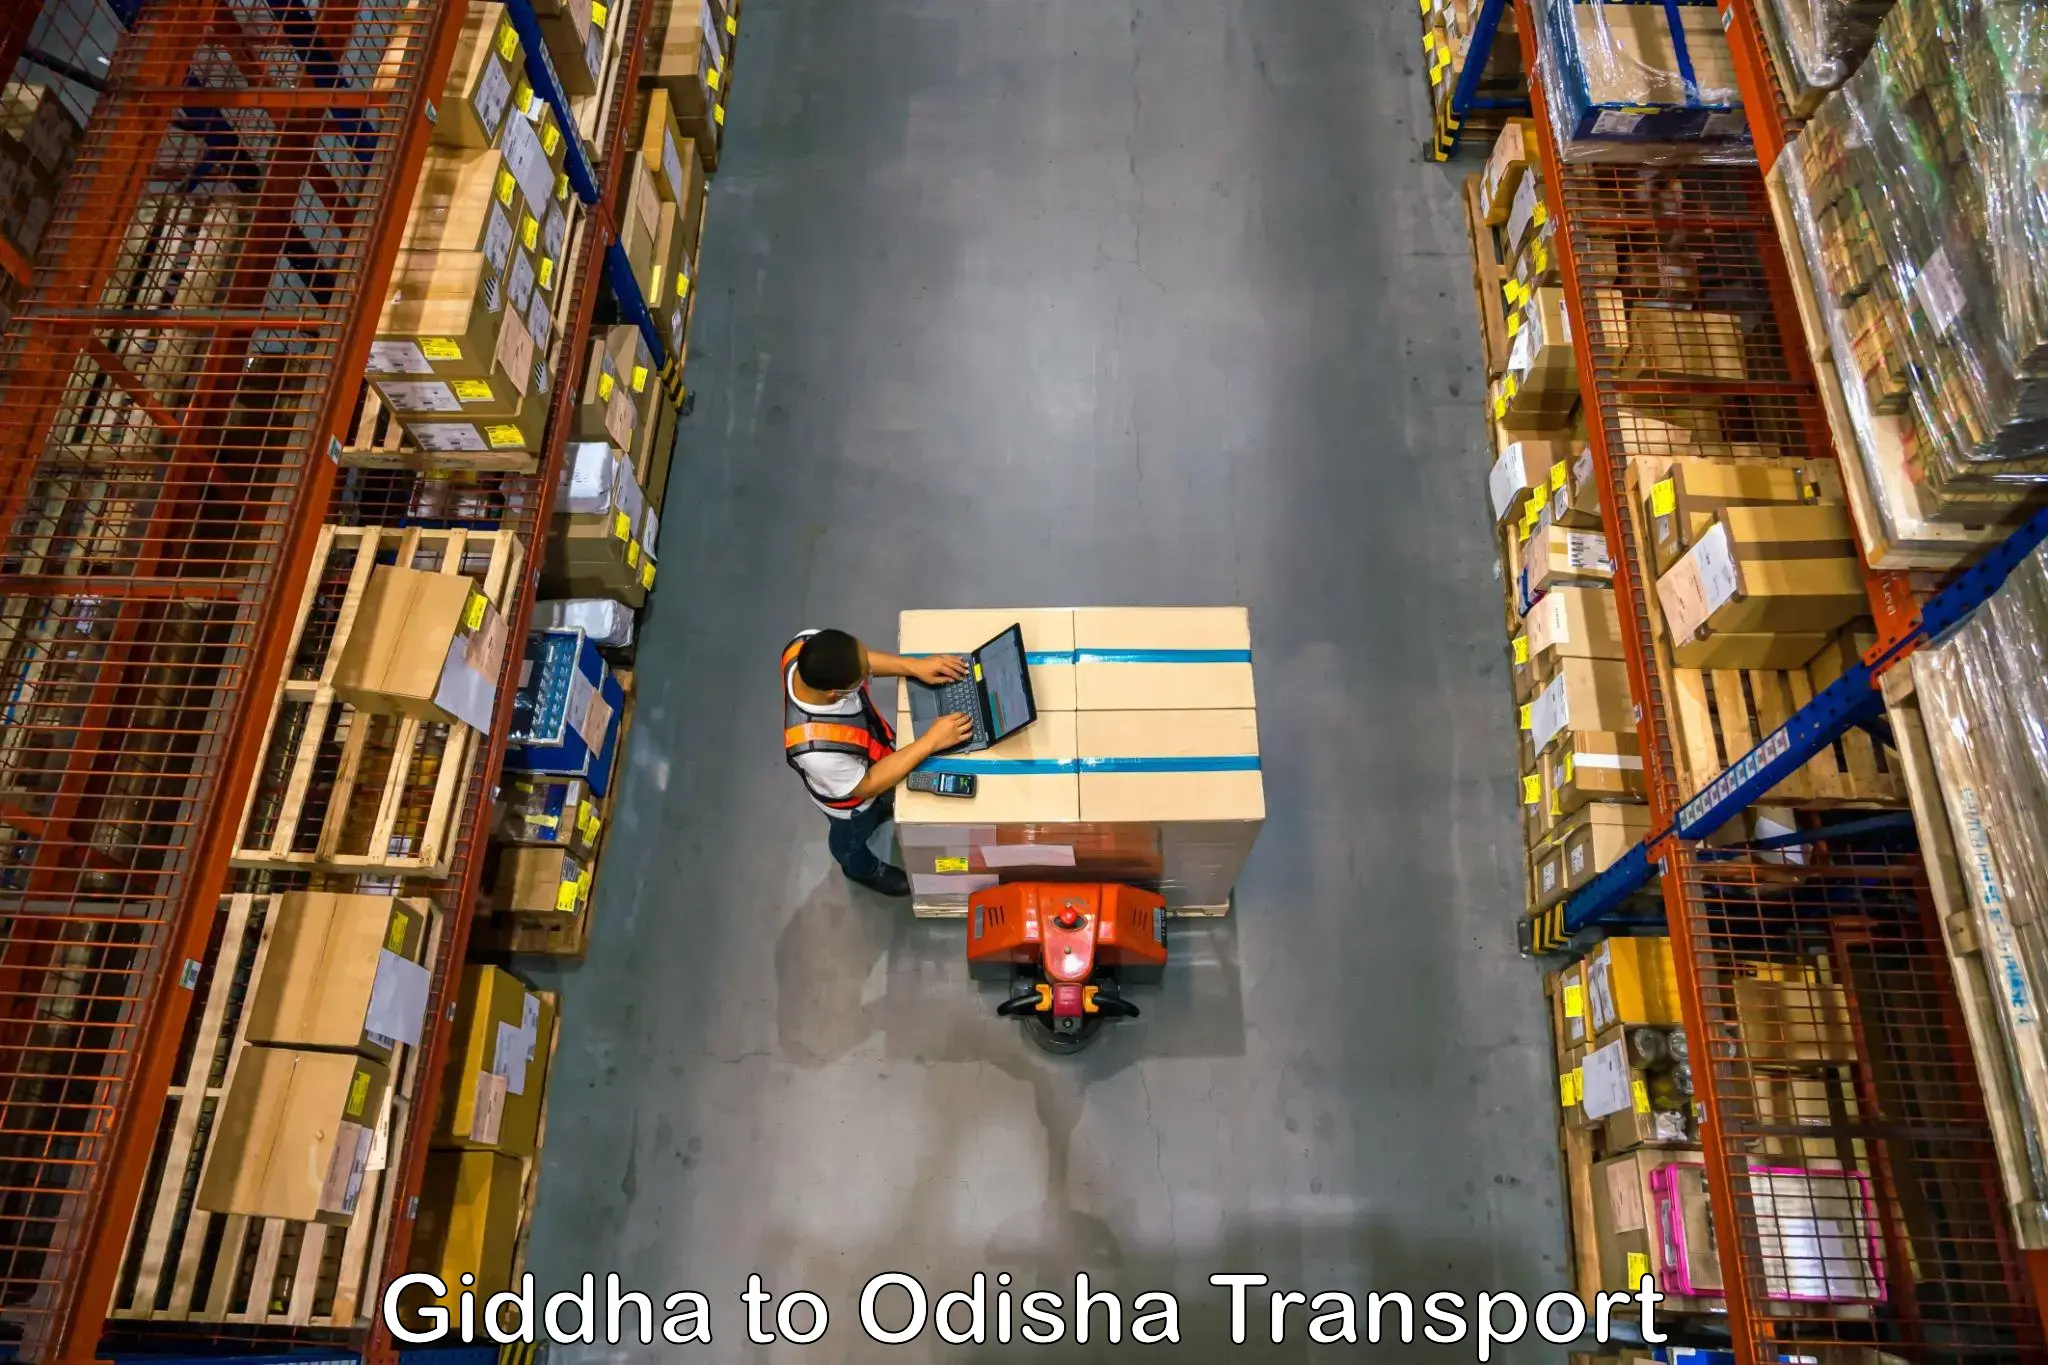 Transport in sharing Giddha to Kuchinda